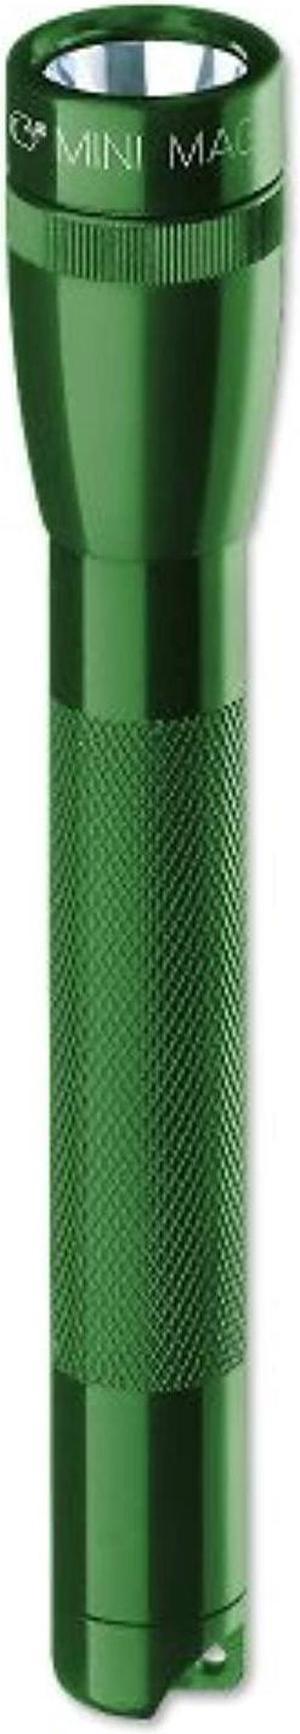 maglite mini maglite 2-cell aa incandescent flashlight with holster, 14 lumens, dark green